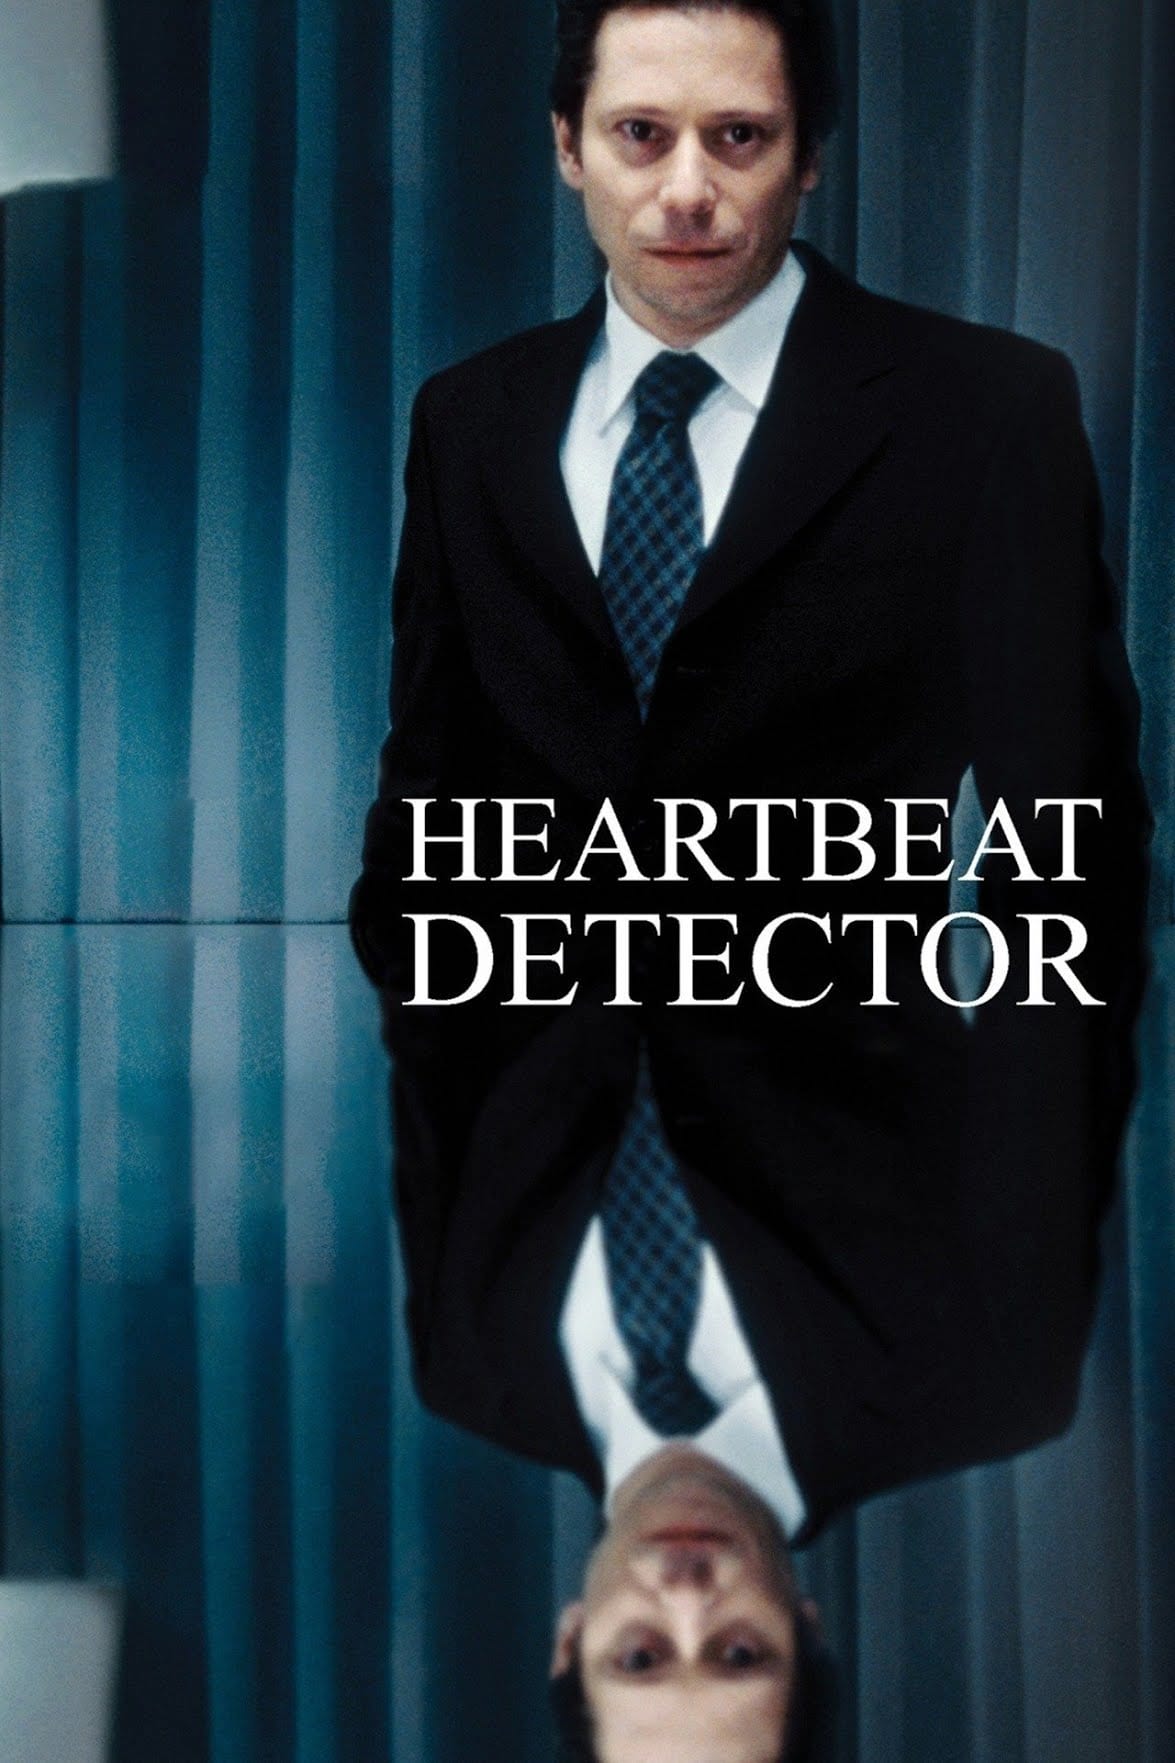 Heartbeat Detector (2007)